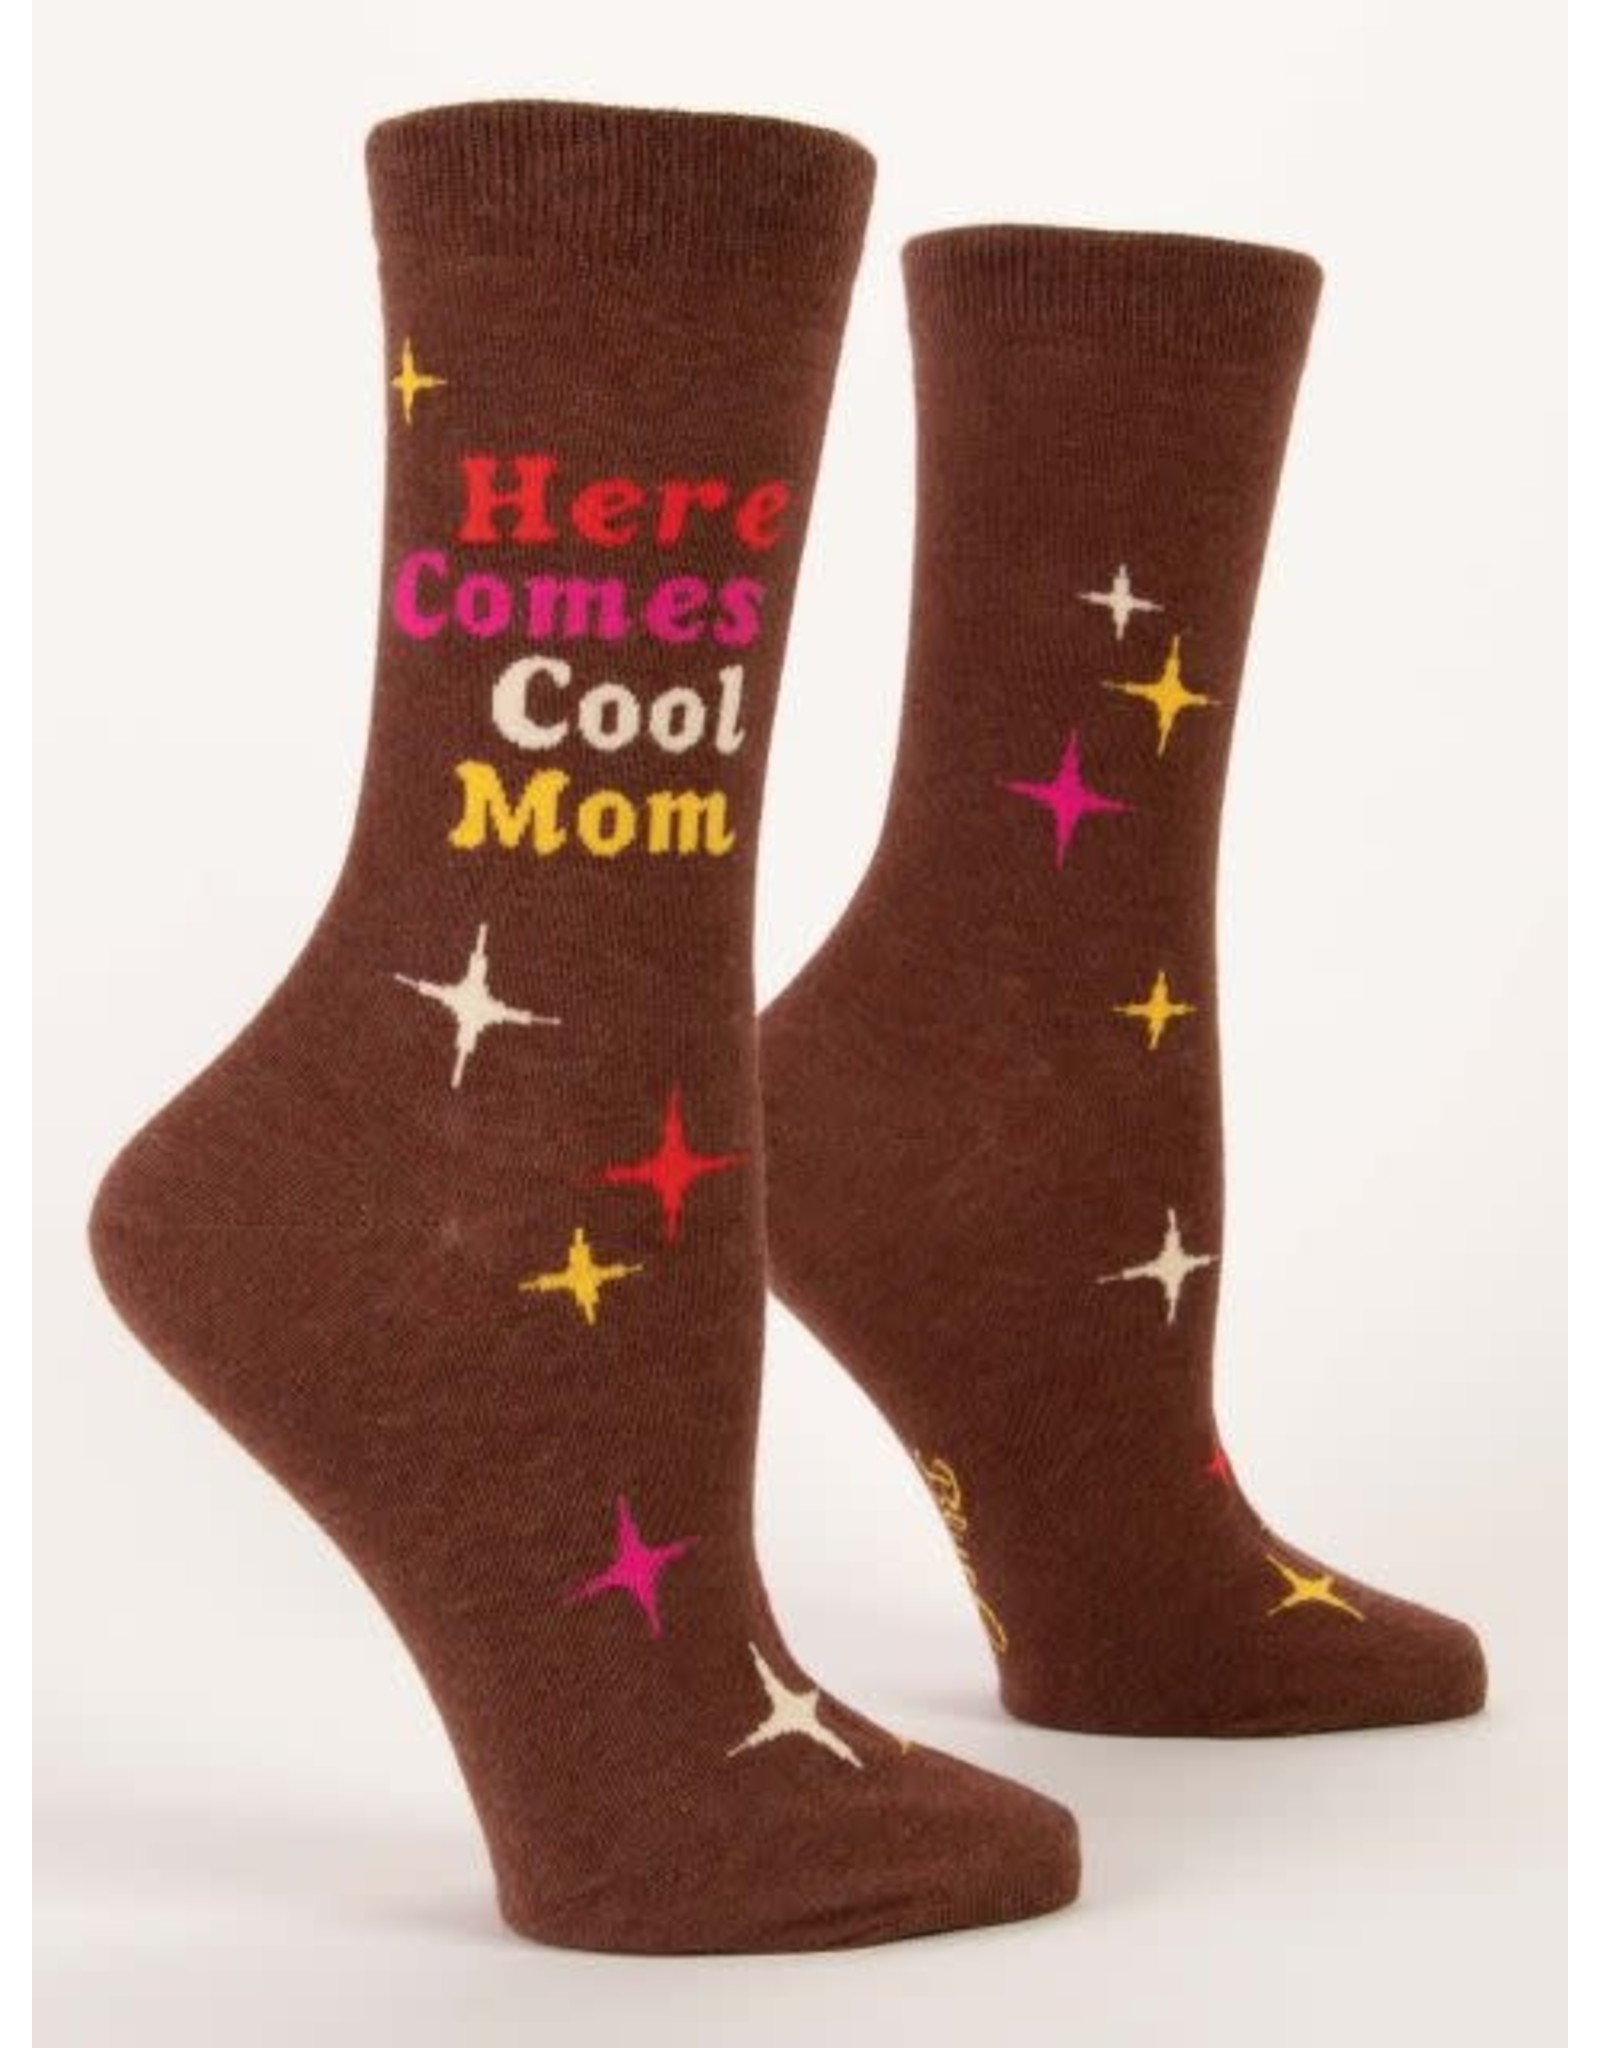 Blue Q - Women's Socks / Here Comes Cool Mom